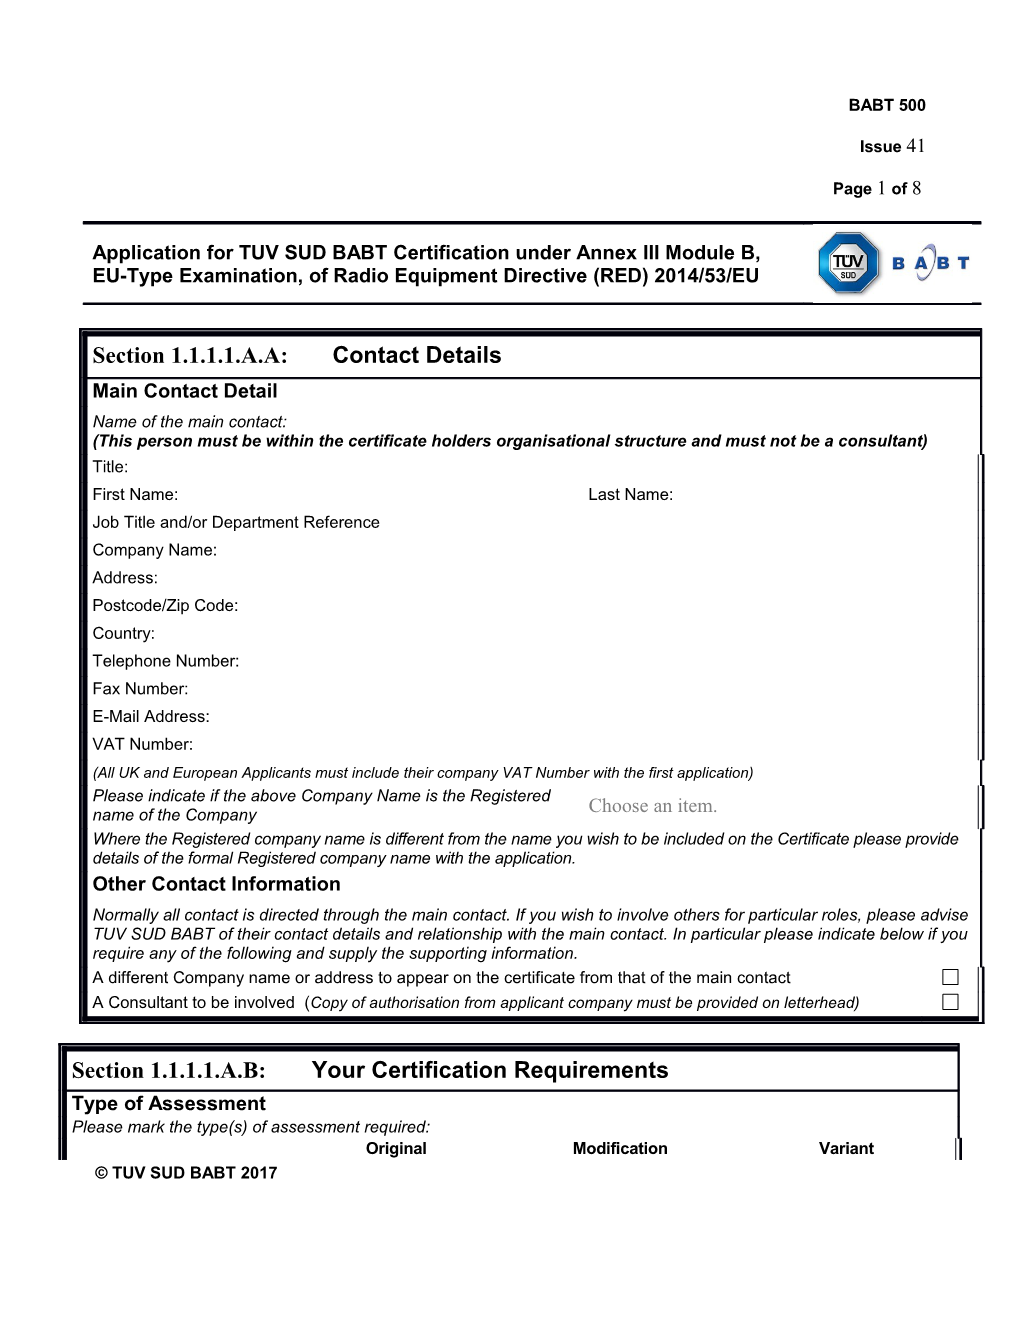 Application for TUV SUD BABT Certification Under Annex III Module B, EU-Type Examination